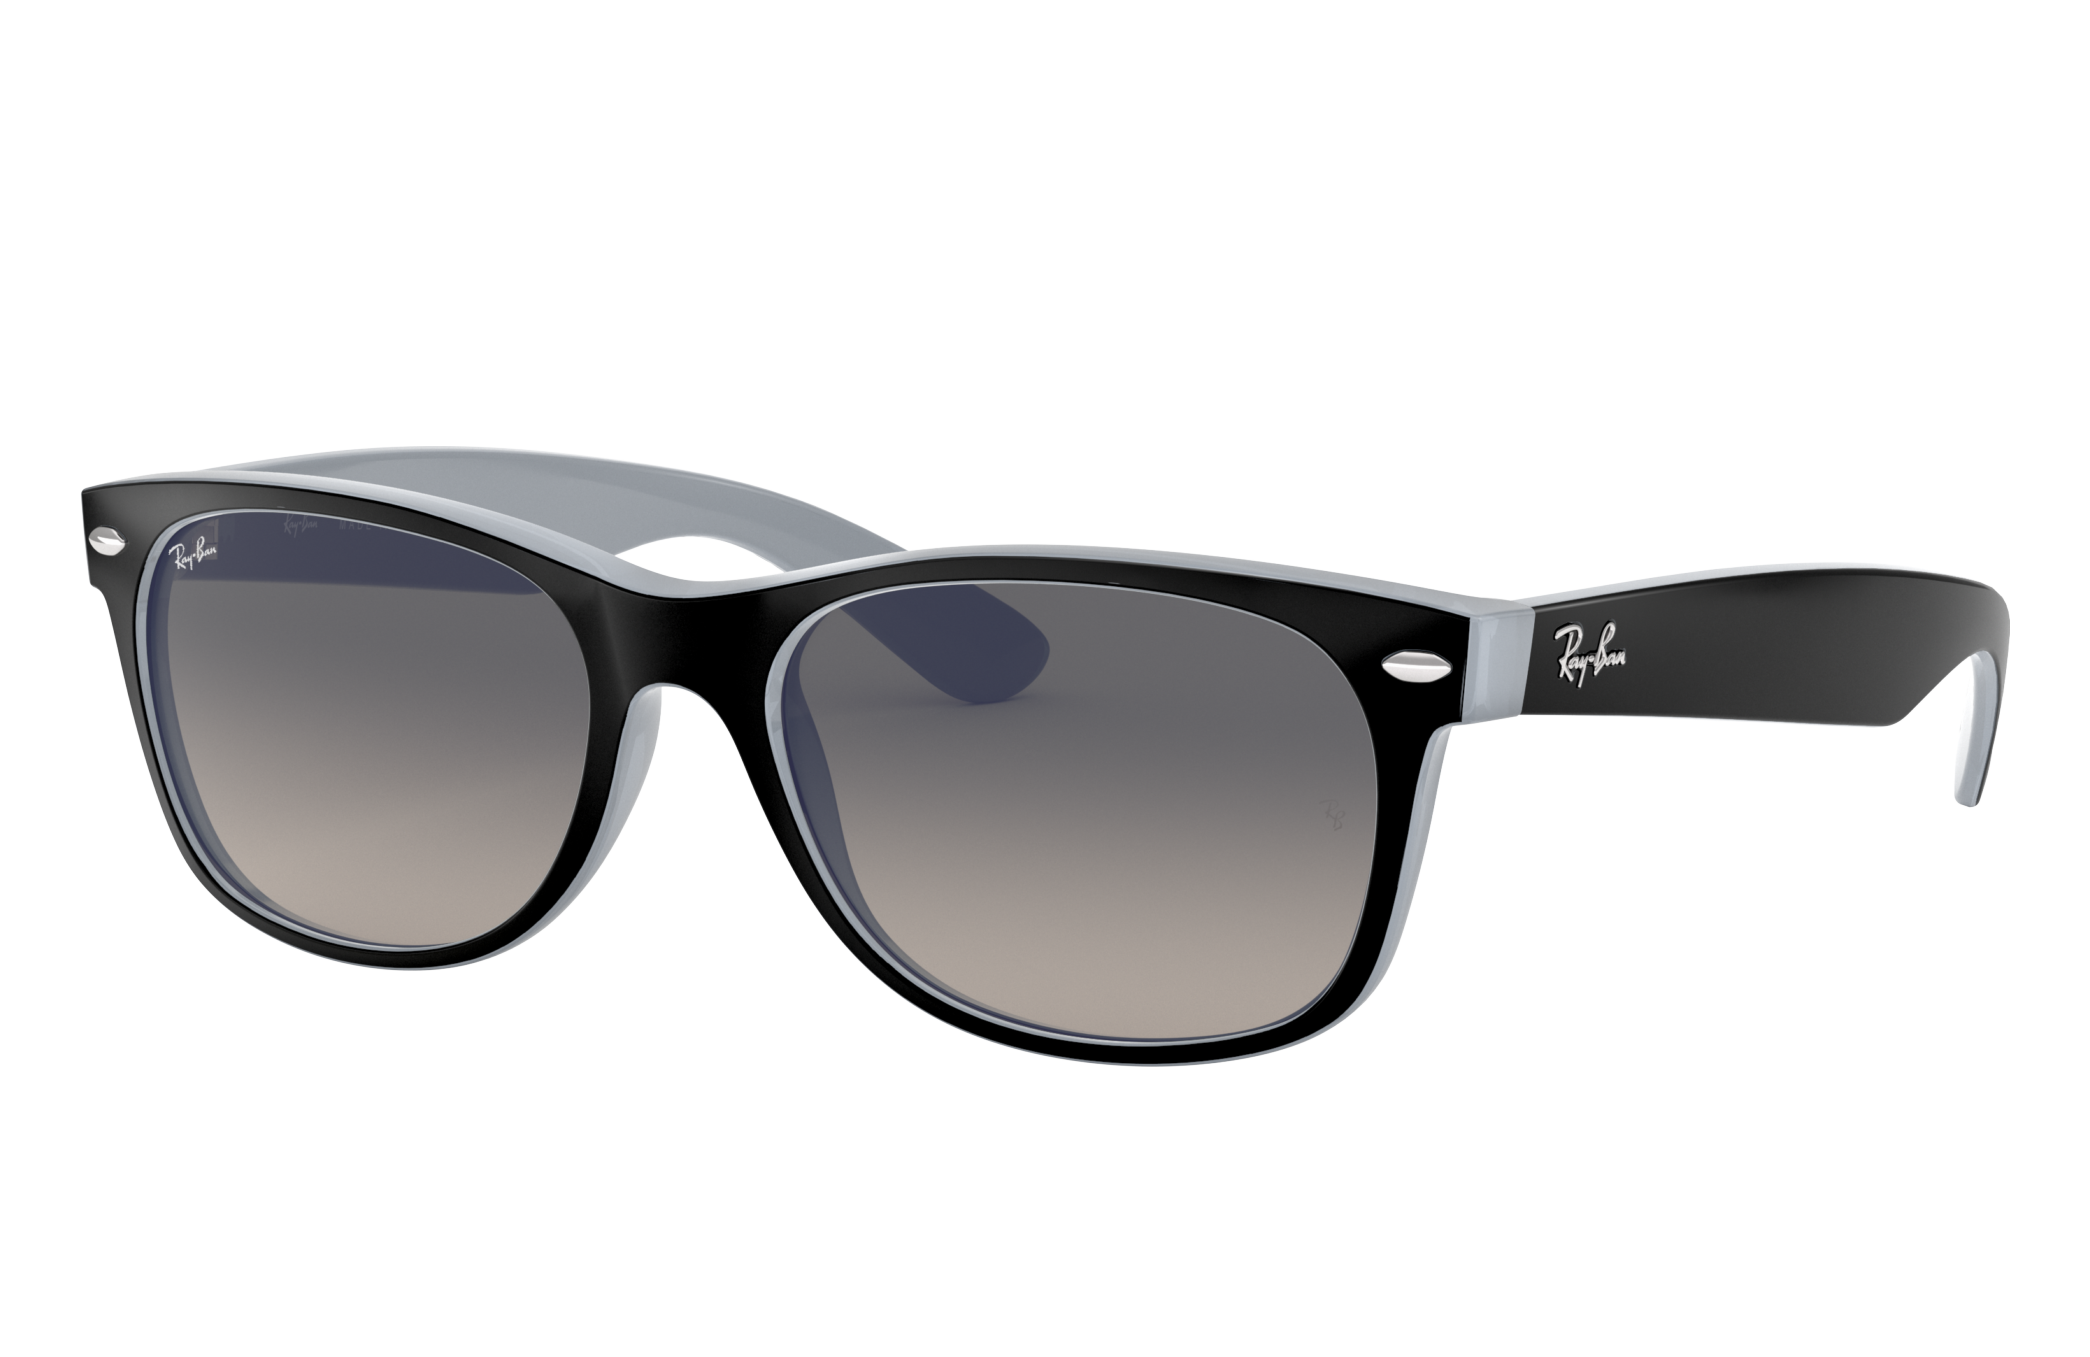 Meander ziel Van New Wayfarer Color Mix Sunglasses in Black and Grey | Ray-Ban®